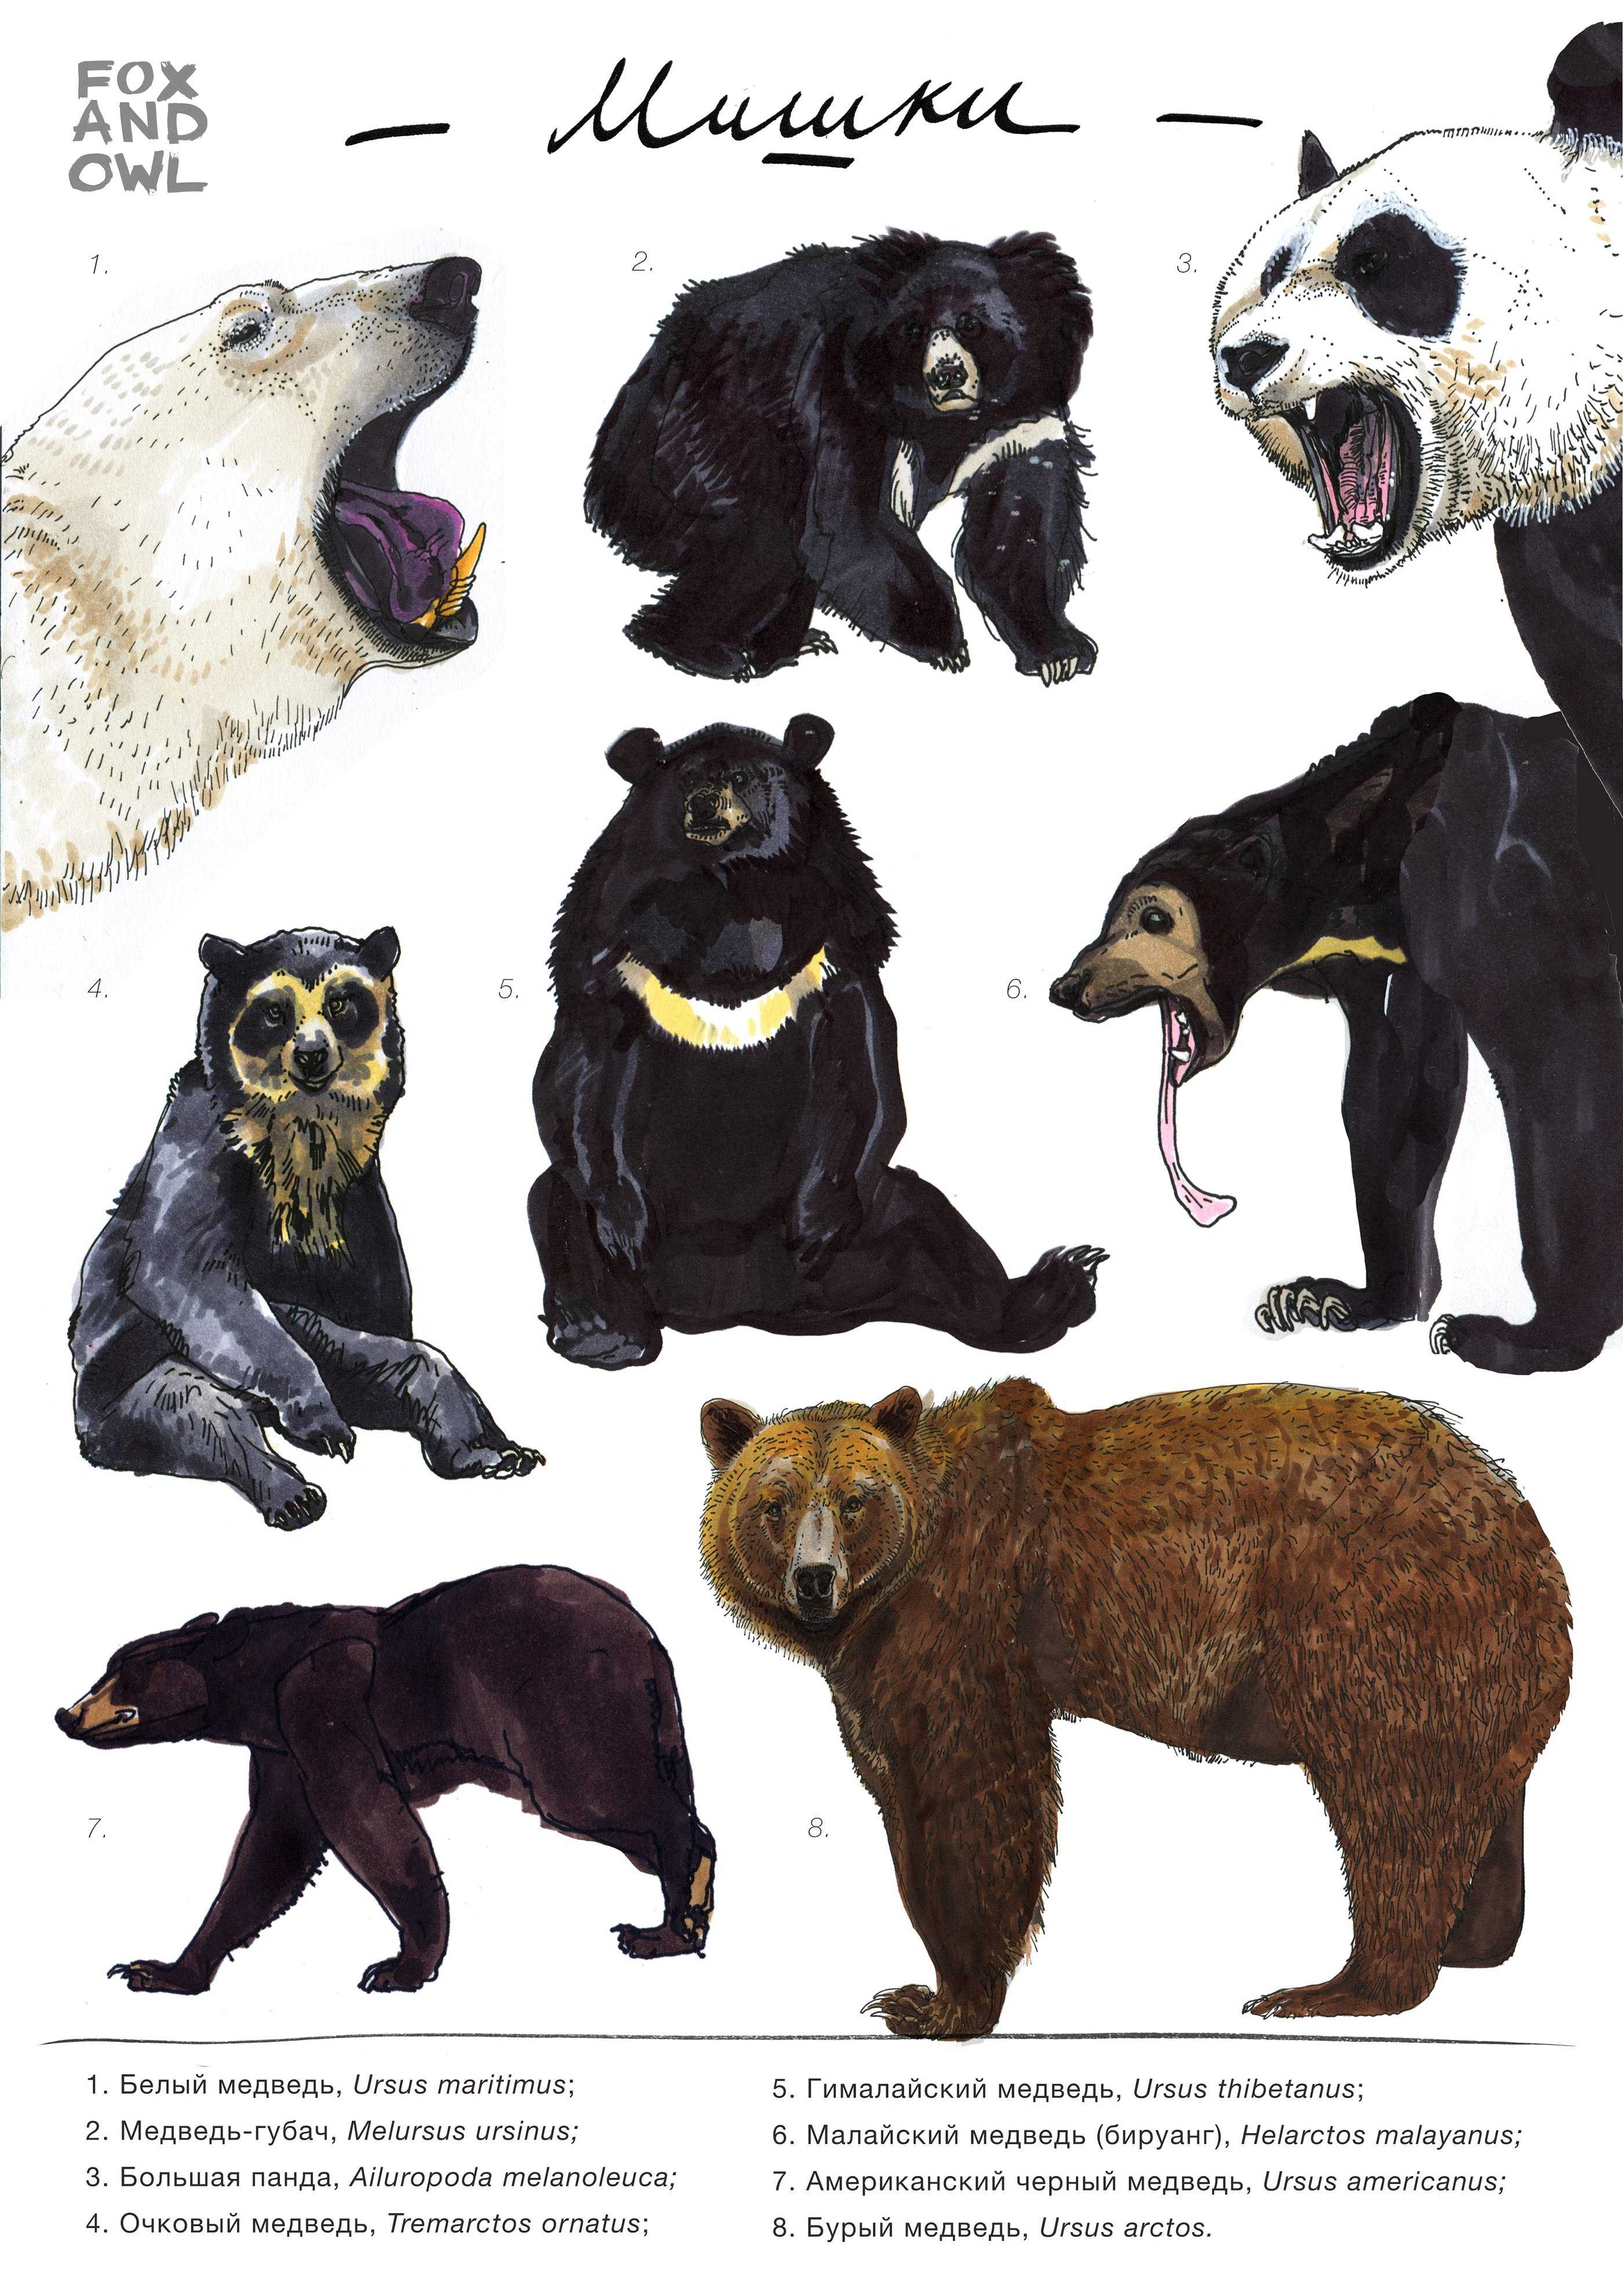 все виды медведей фото и названия